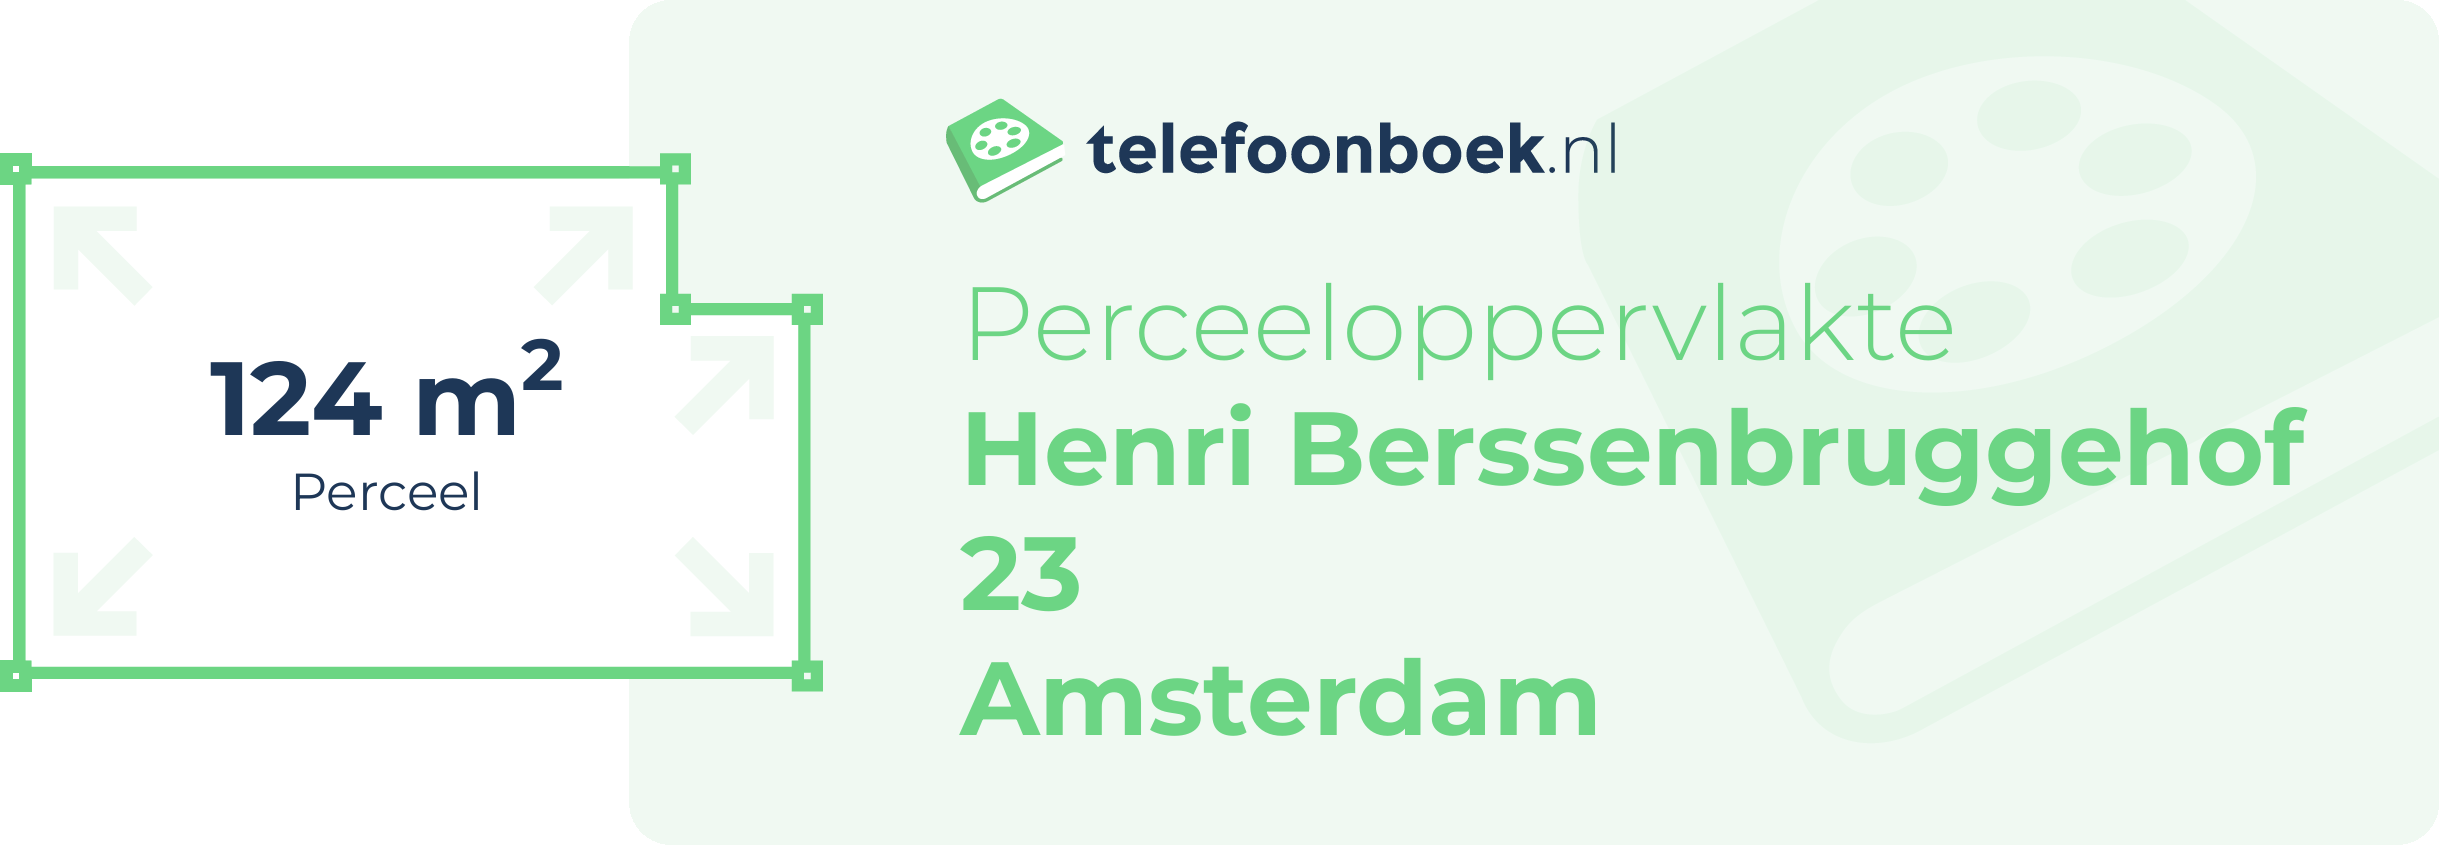 Perceeloppervlakte Henri Berssenbruggehof 23 Amsterdam